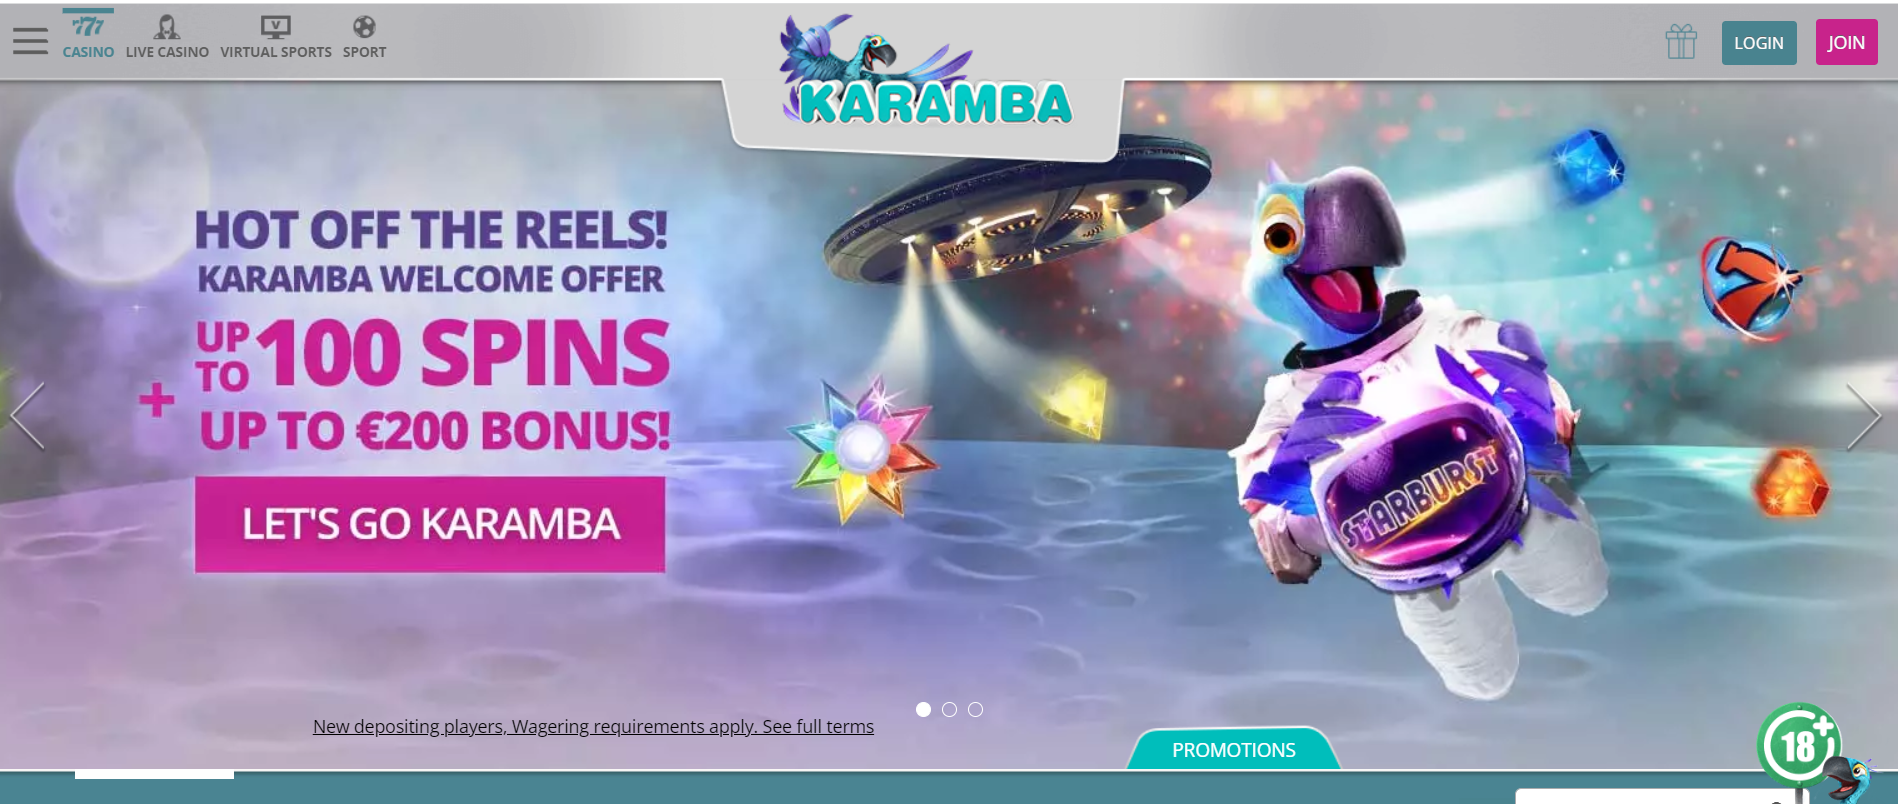 Karamba Reviews - Image 1